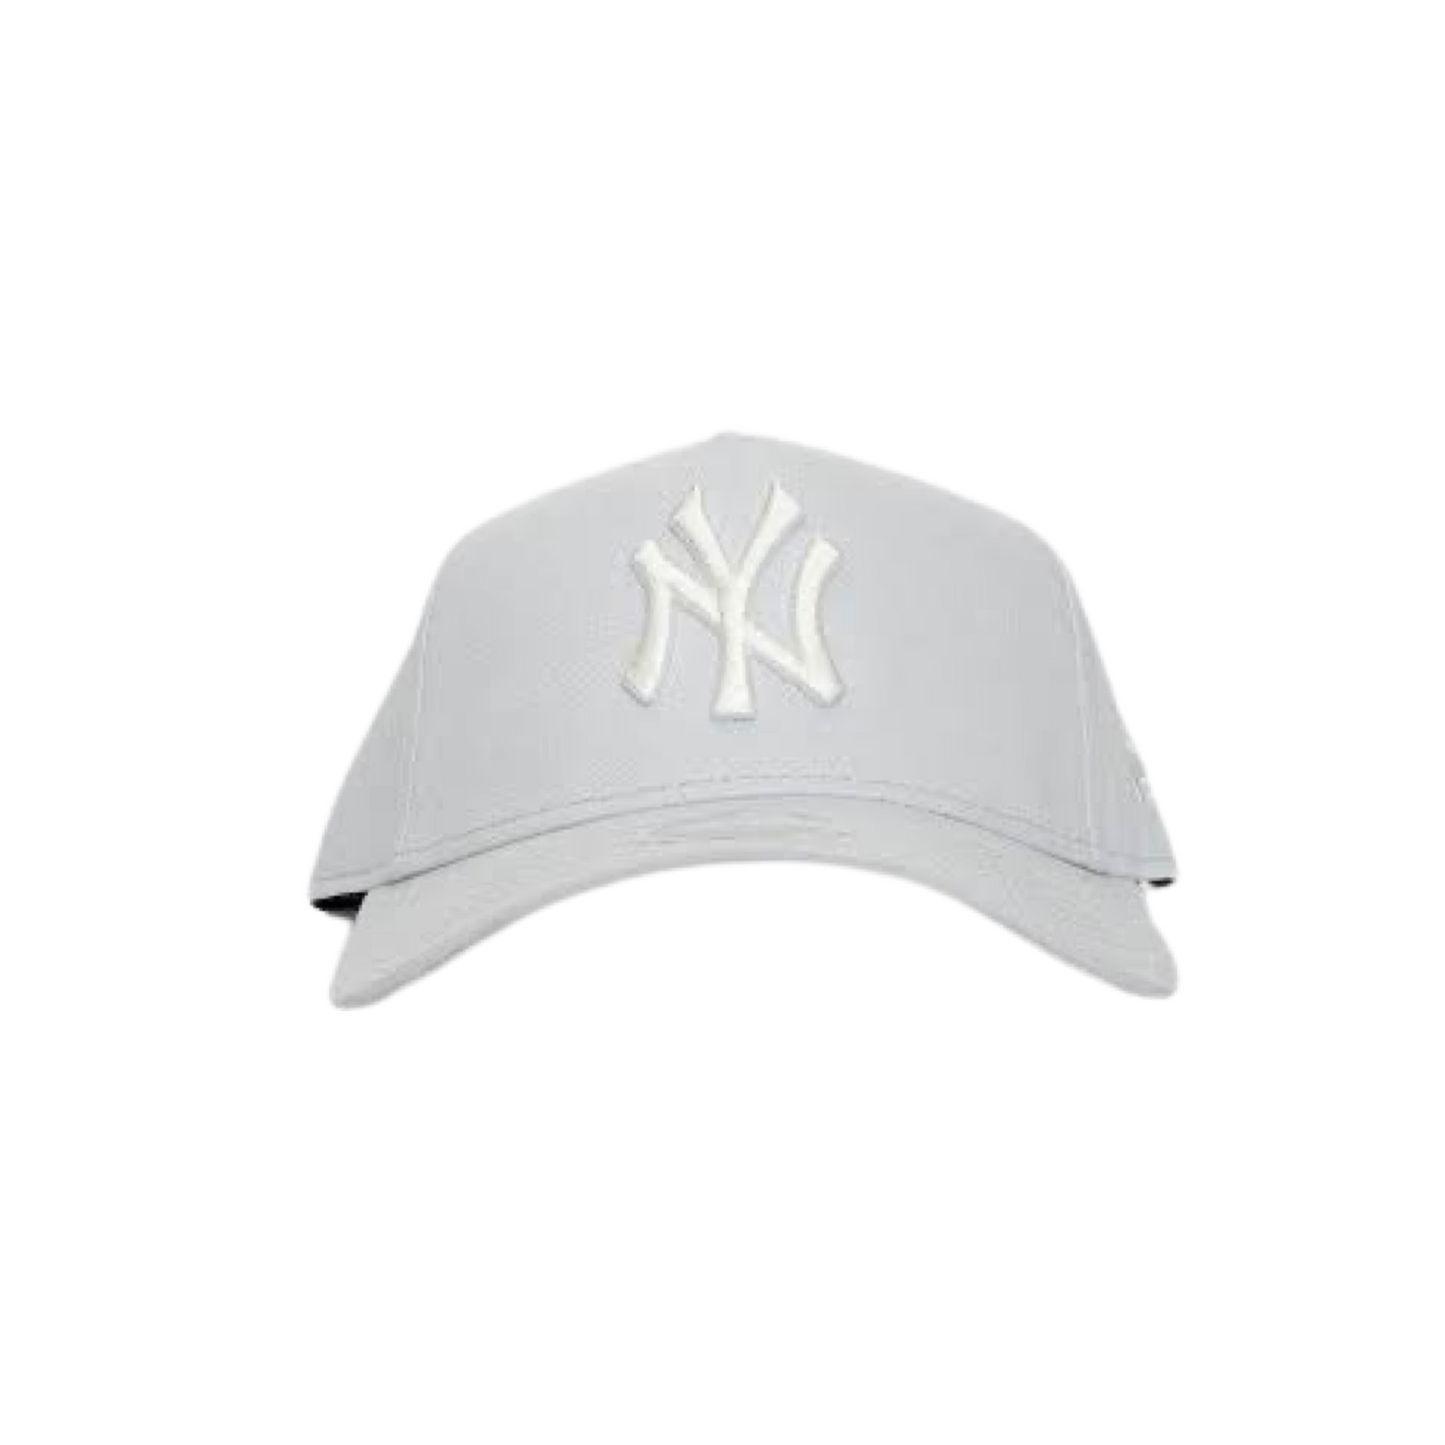 Women's New Era 940 A-Frame New York Yankees Grey Cream Clothstrap Cap